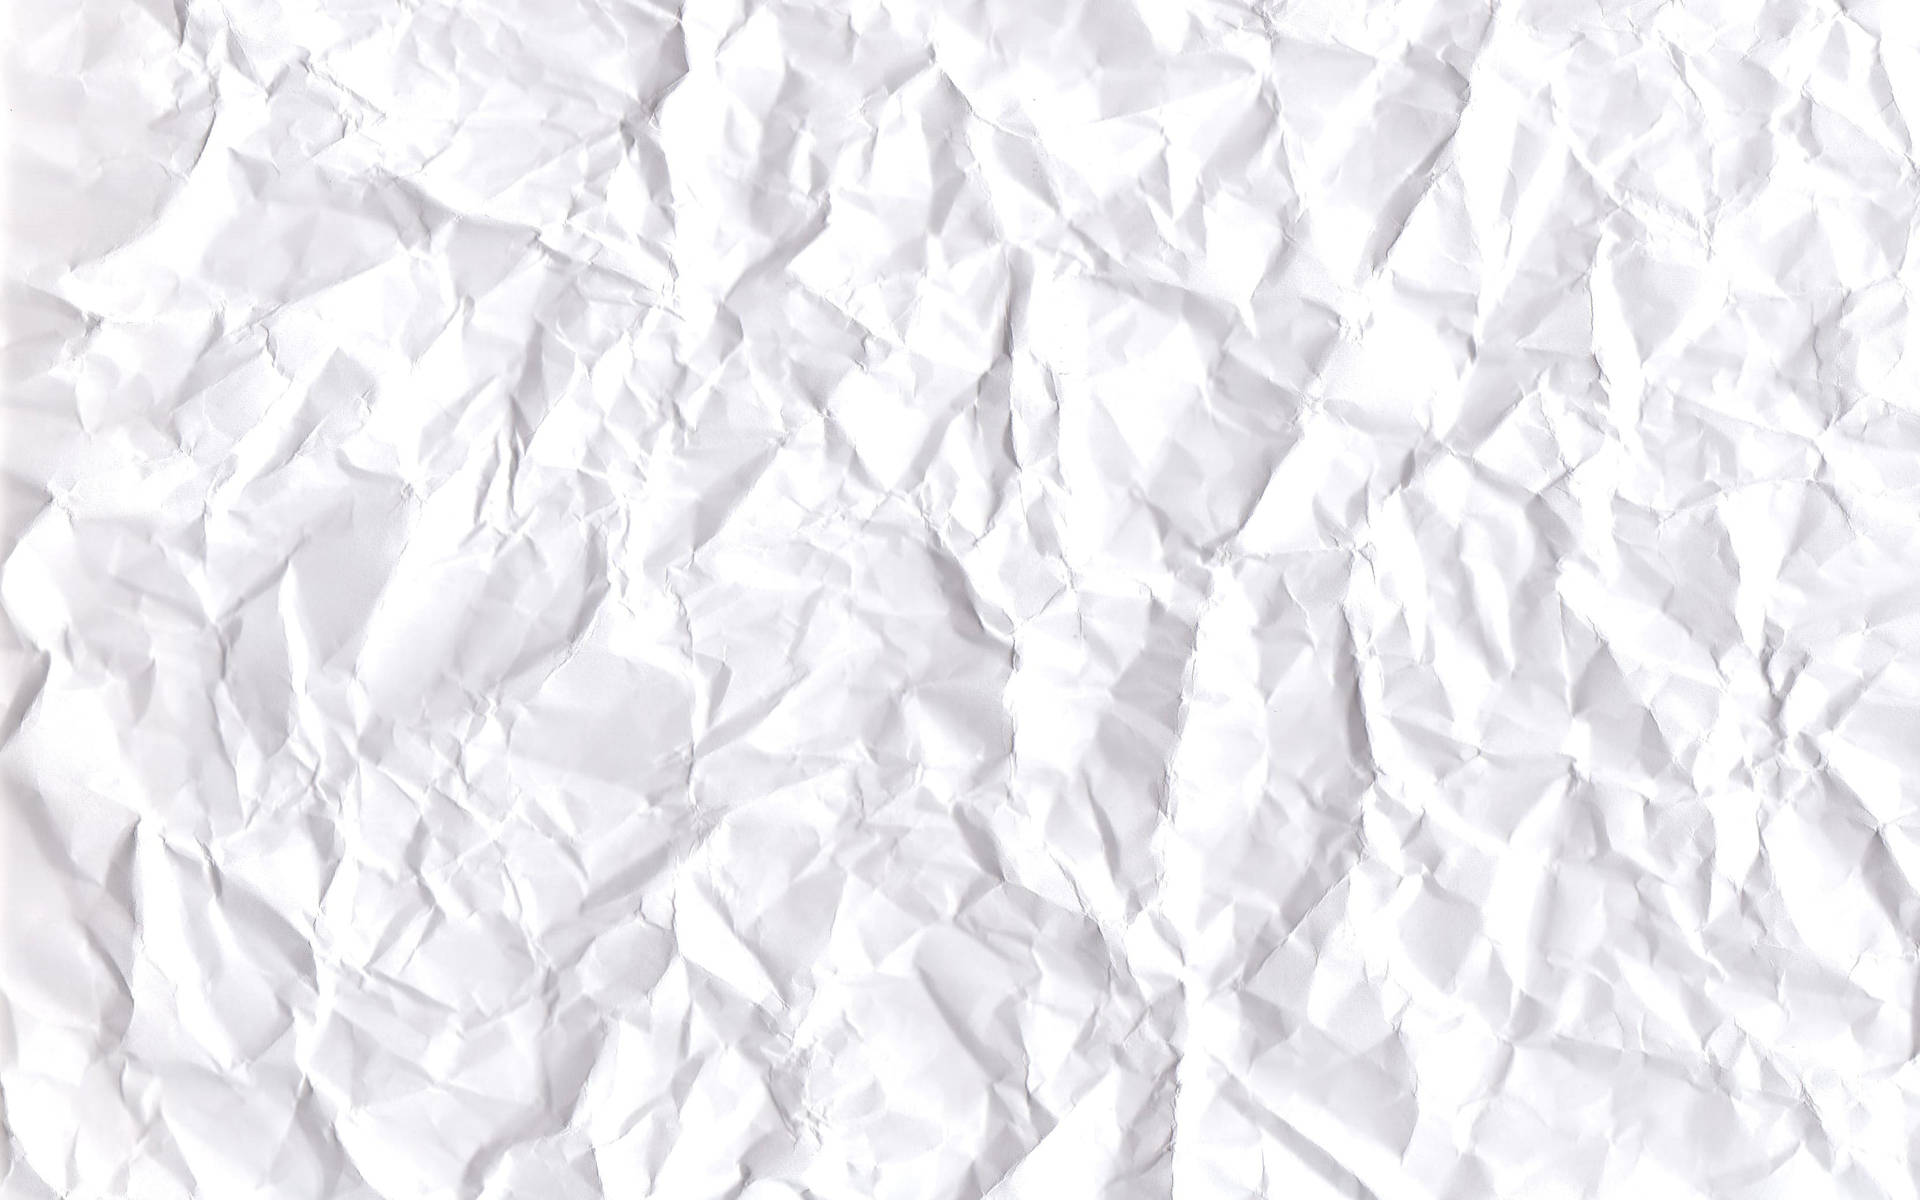 Crumpled White Paper Presentation Background